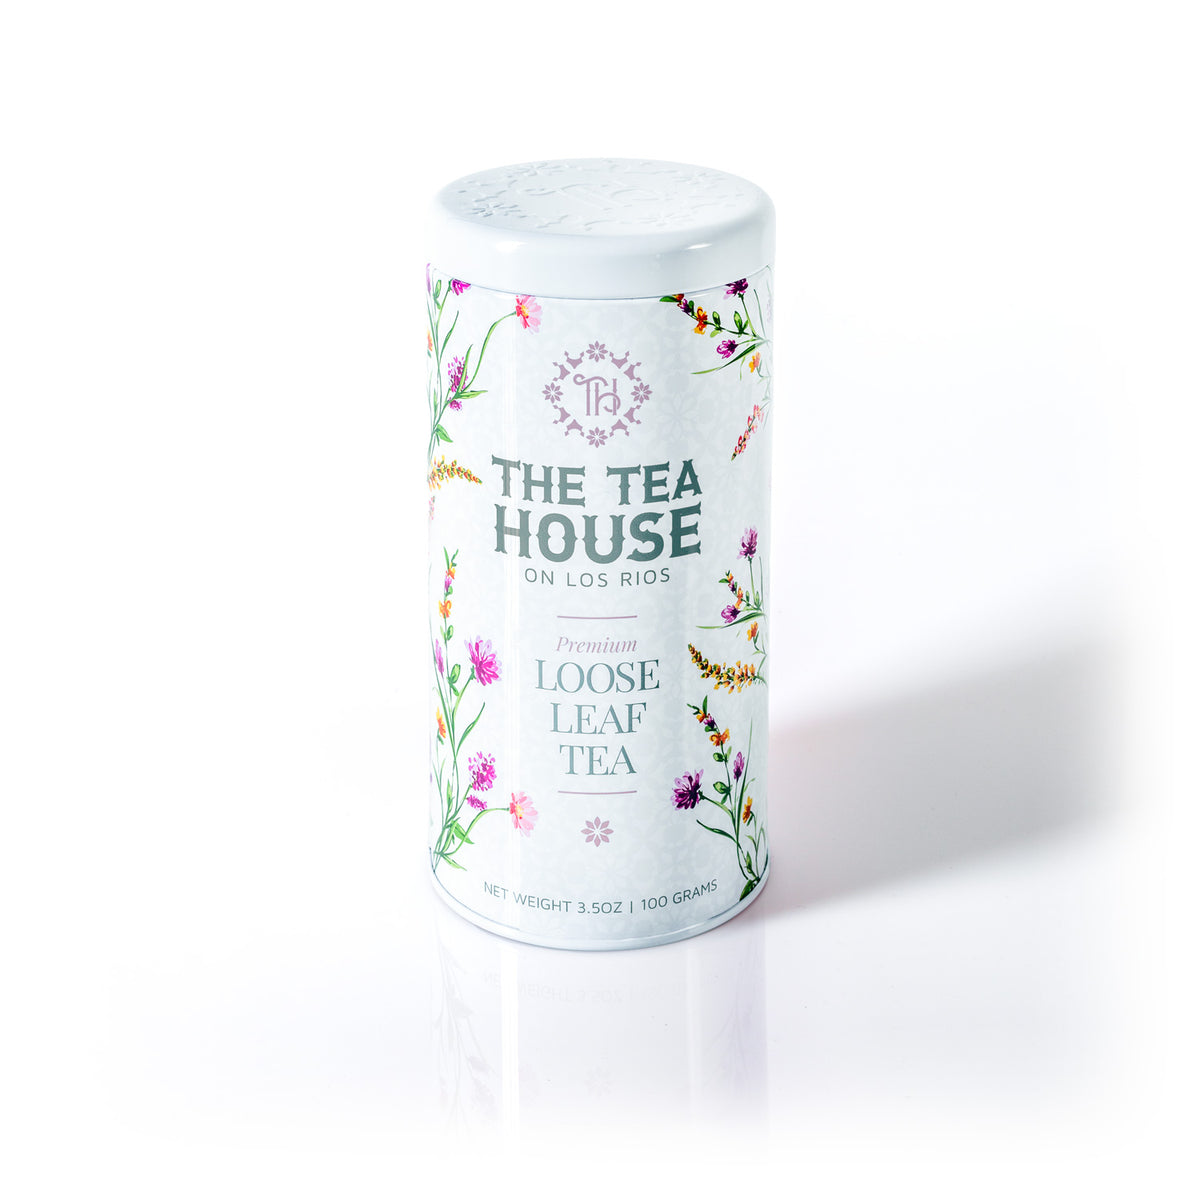 100g Loose Leaf Tea Tin from The Tea House on Los Rios